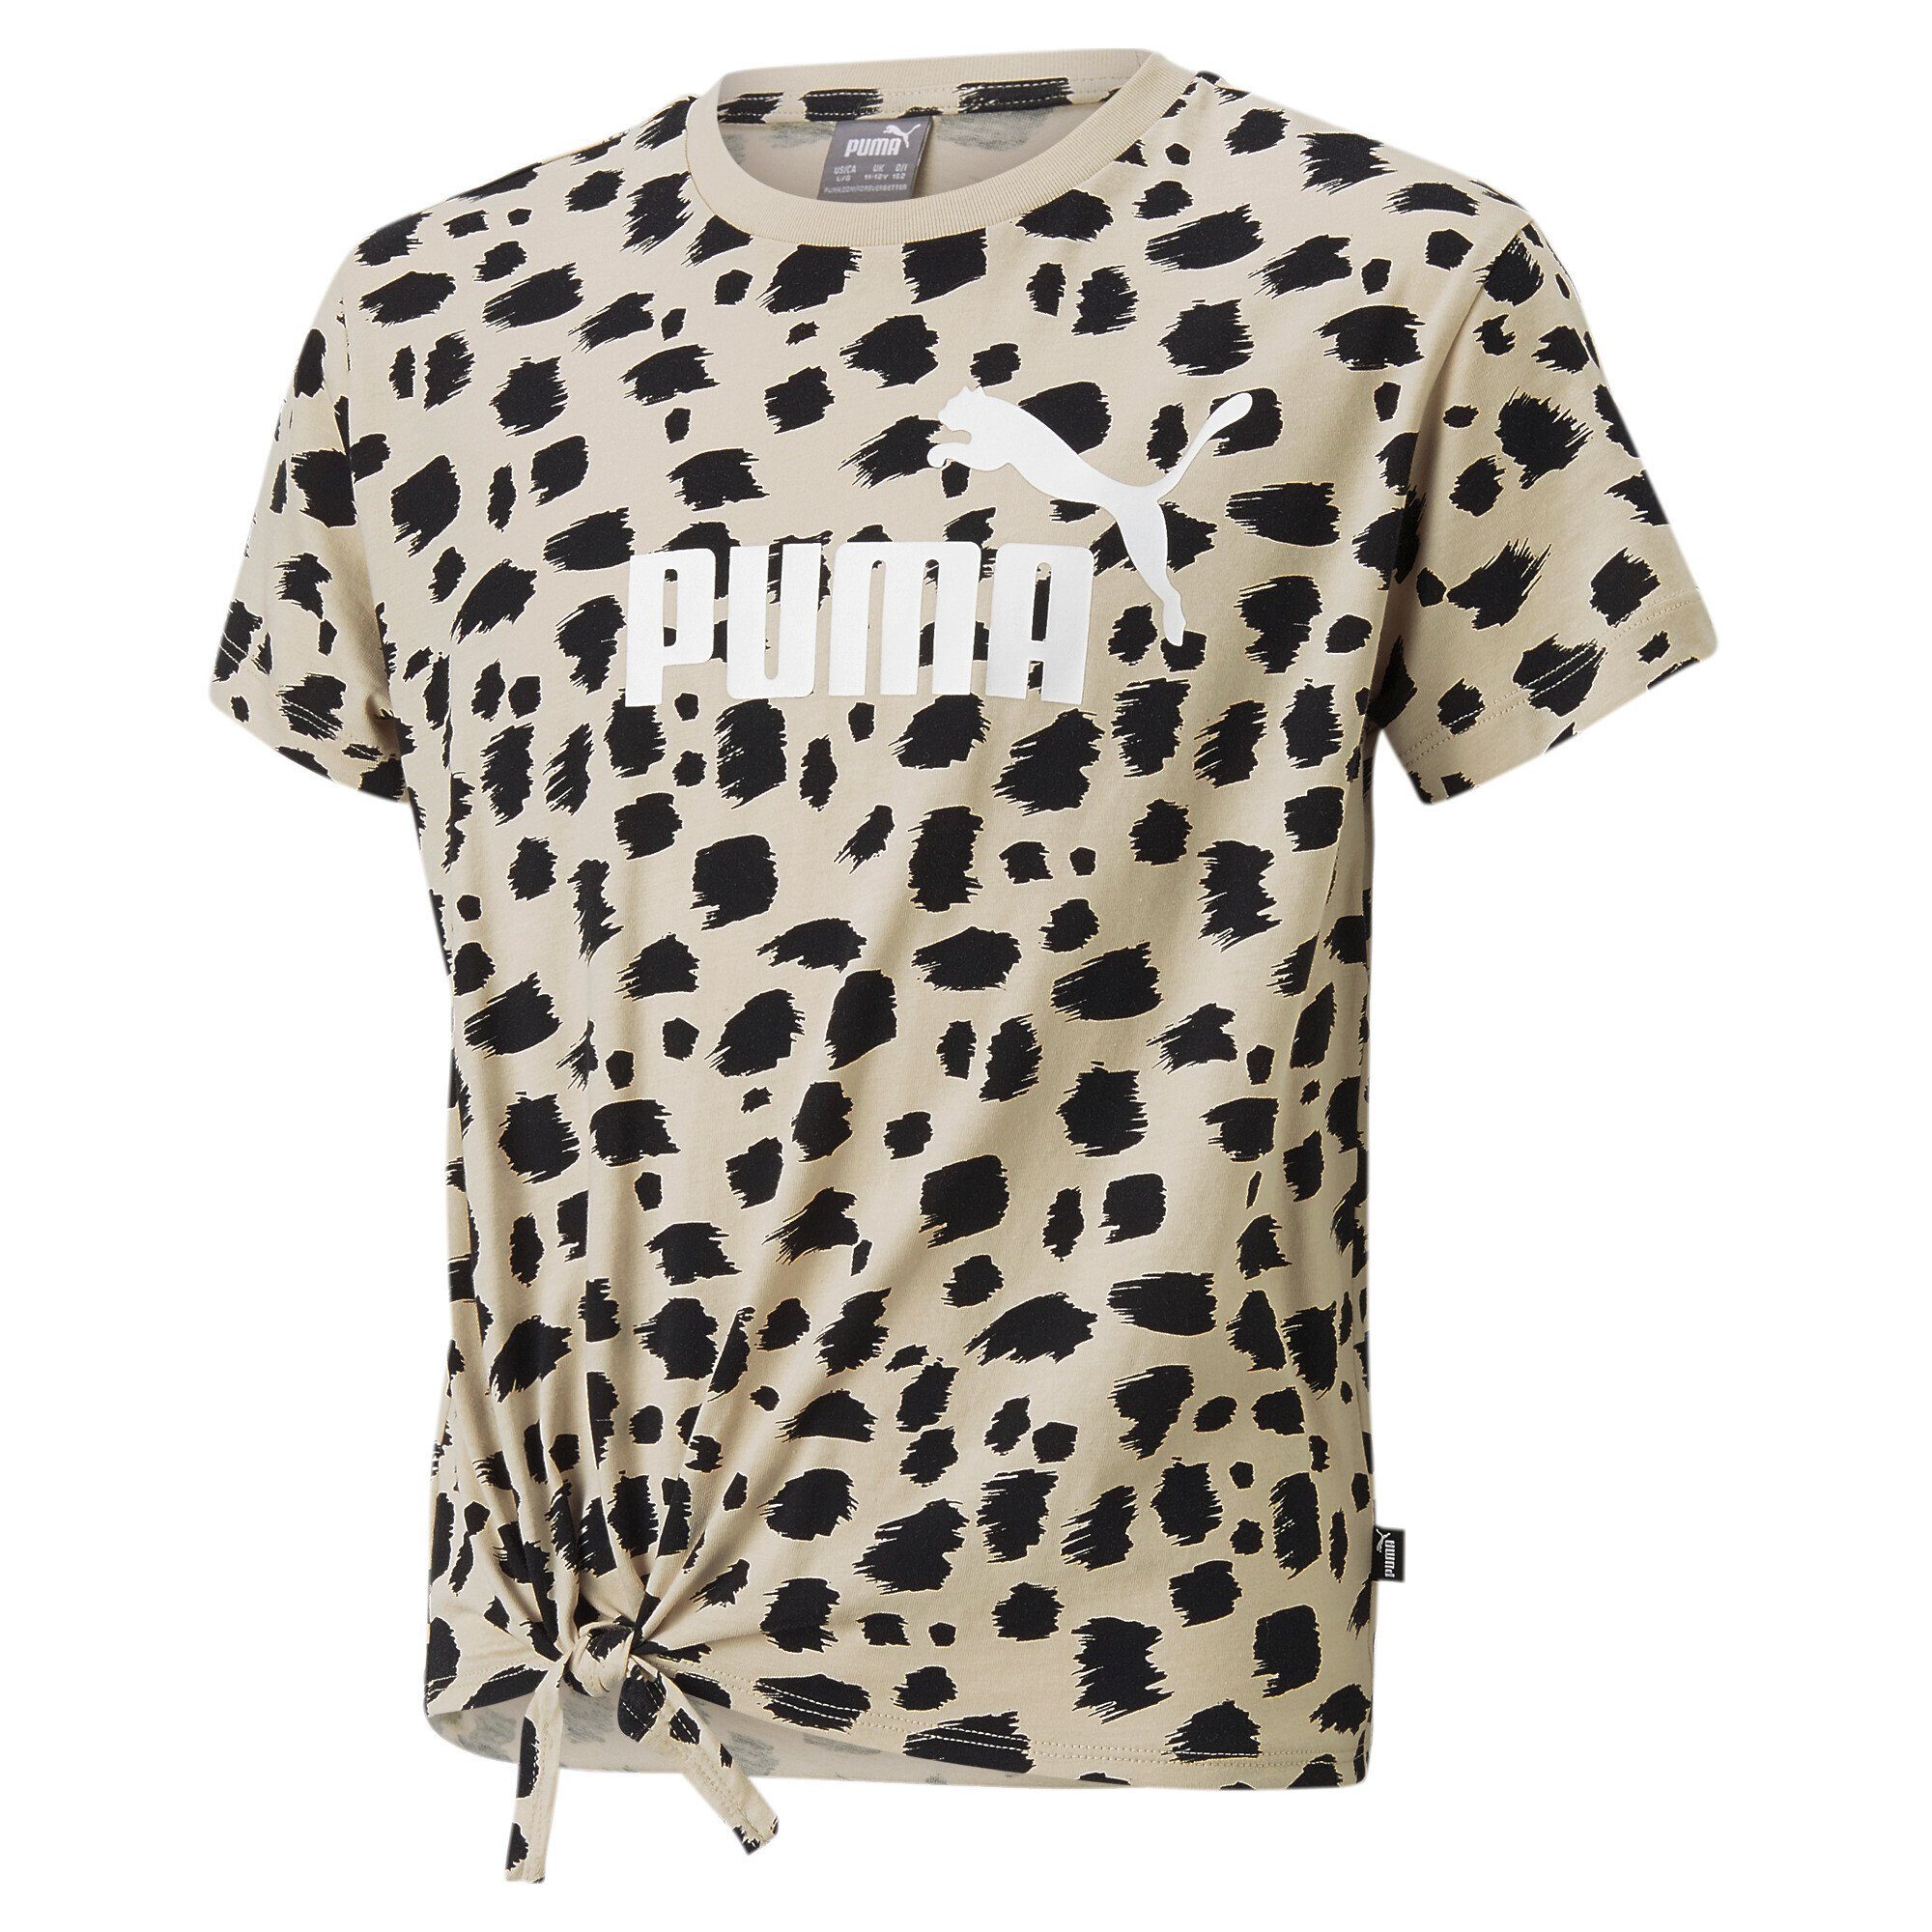 Knotted T-Shirt Essentials+ Jugendliche Animal Printed PUMA T-Shirt